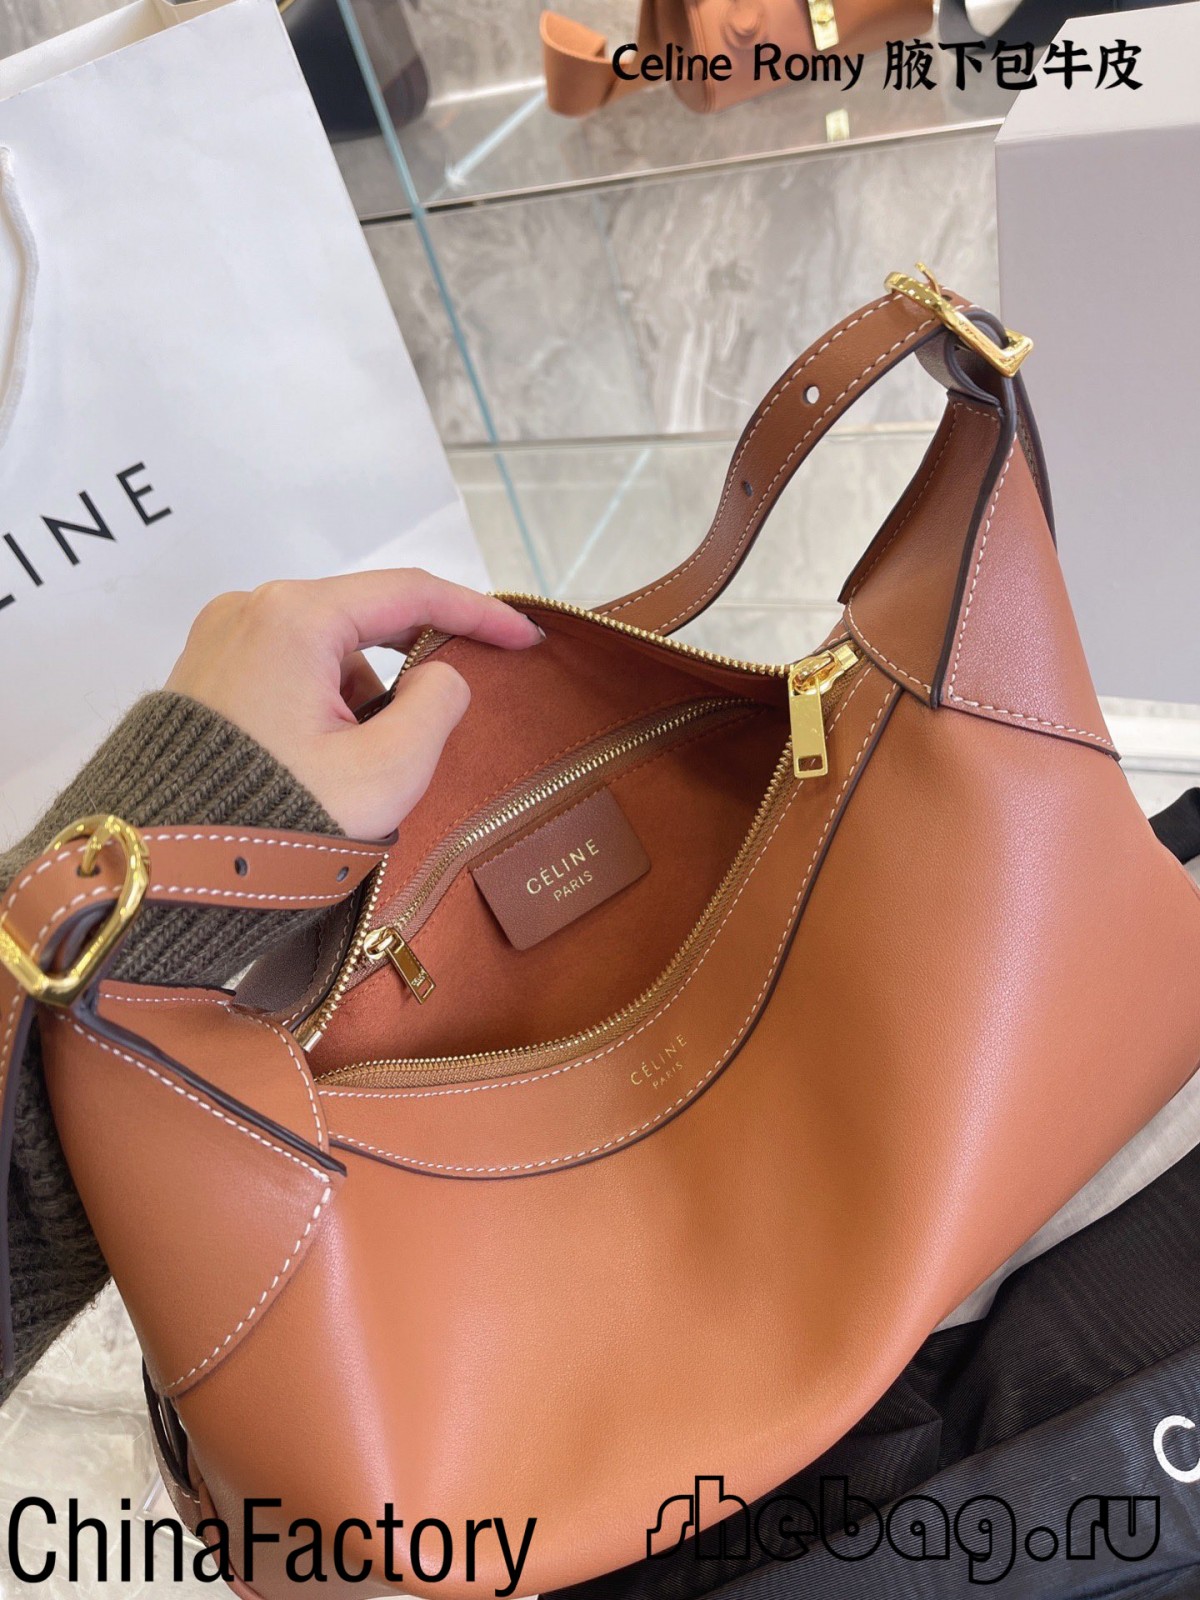 Parhaat replica celine -laukkuarvostelut: Celine Romy (2022 painos) - Paras laatu Fake Louis Vuitton Bag -verkkokauppa, Replica designer bag ru